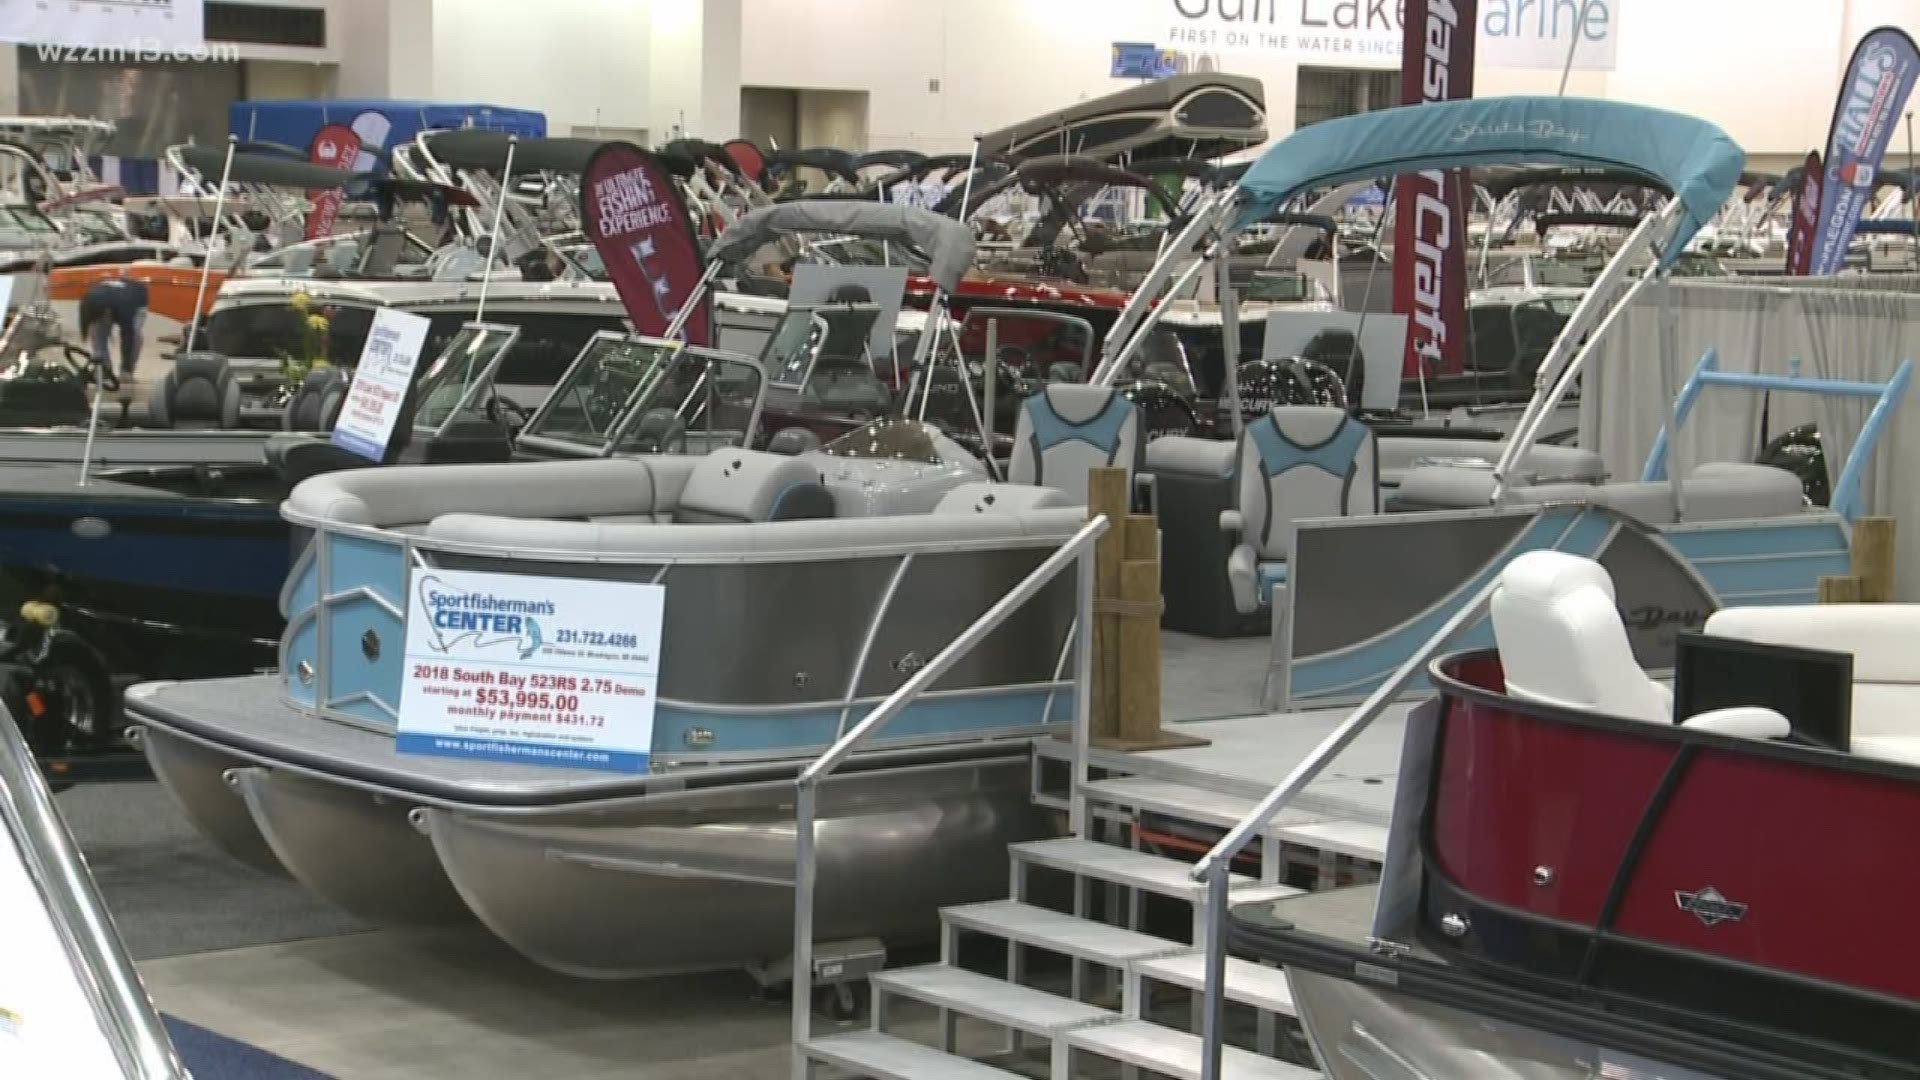 Boat show underway in Grand Rapids